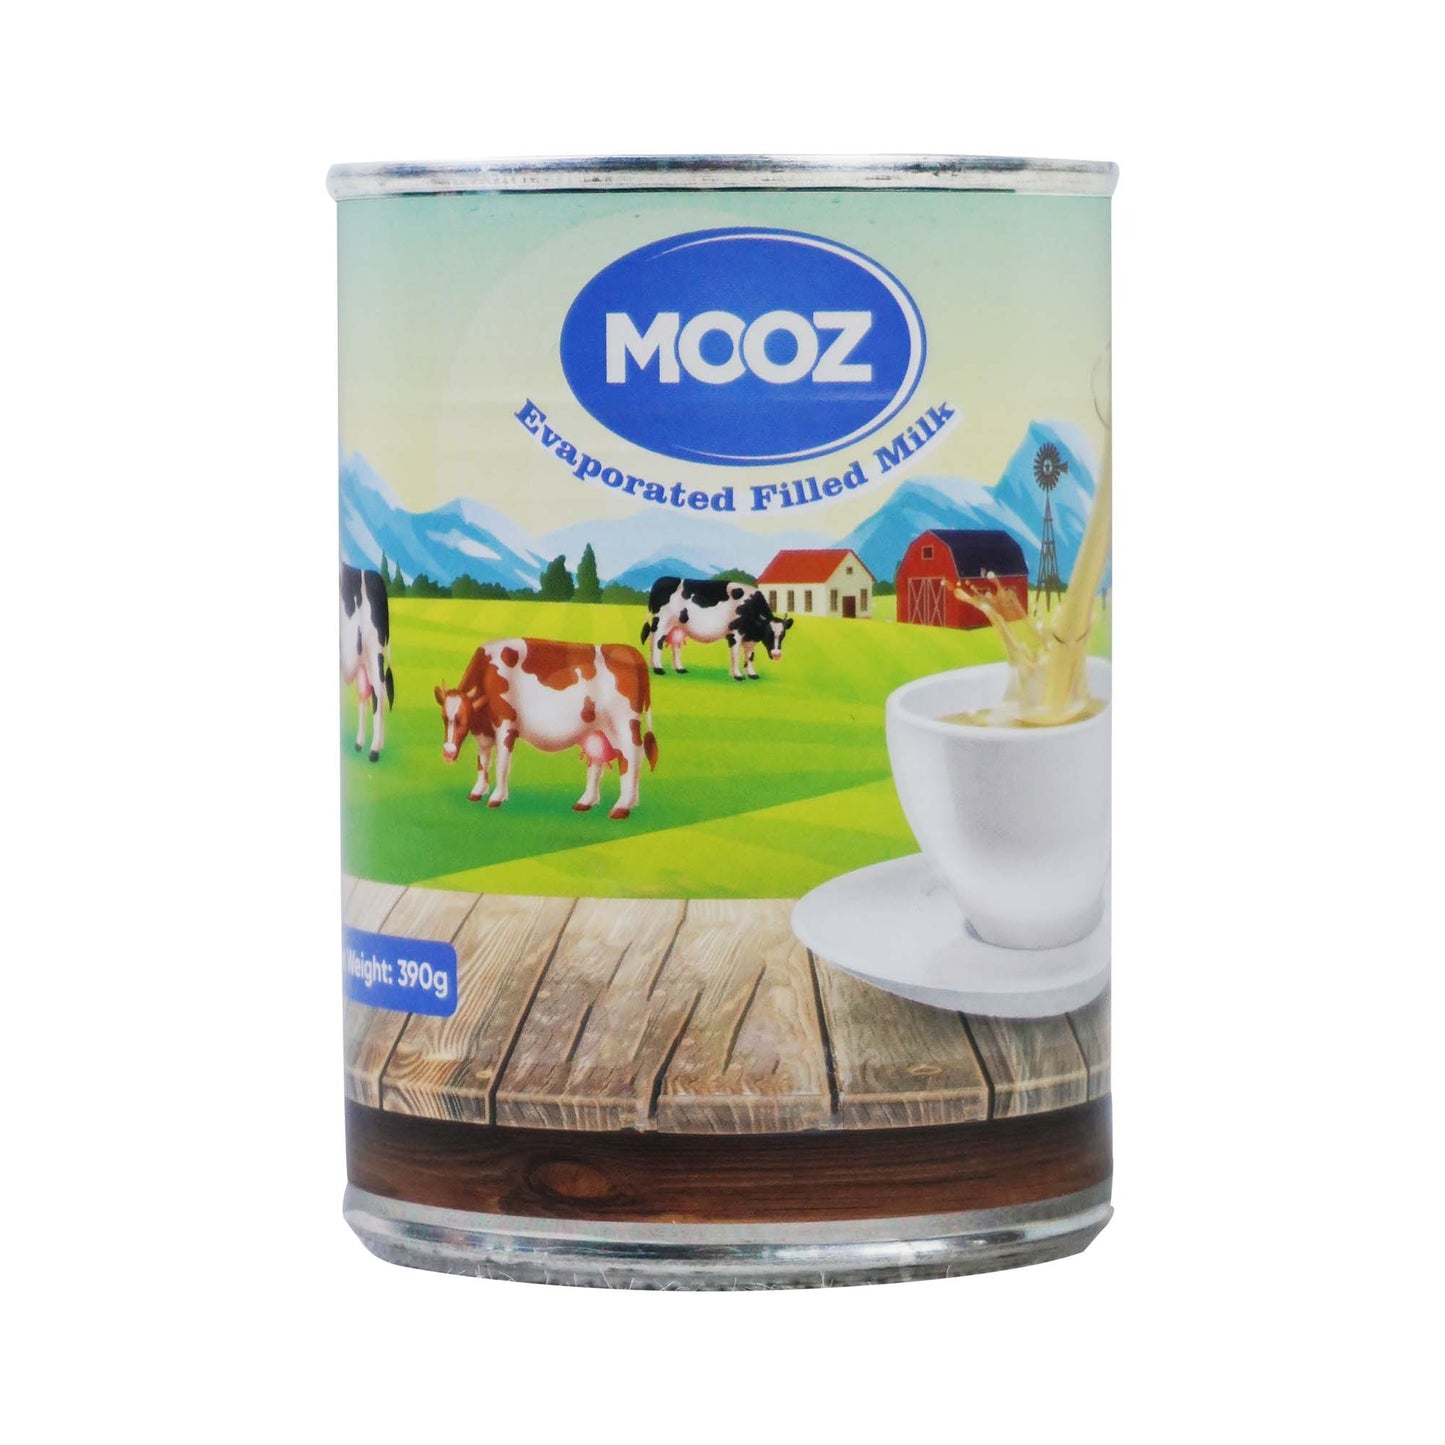 Mooz Evaporated Filled Milk 390g